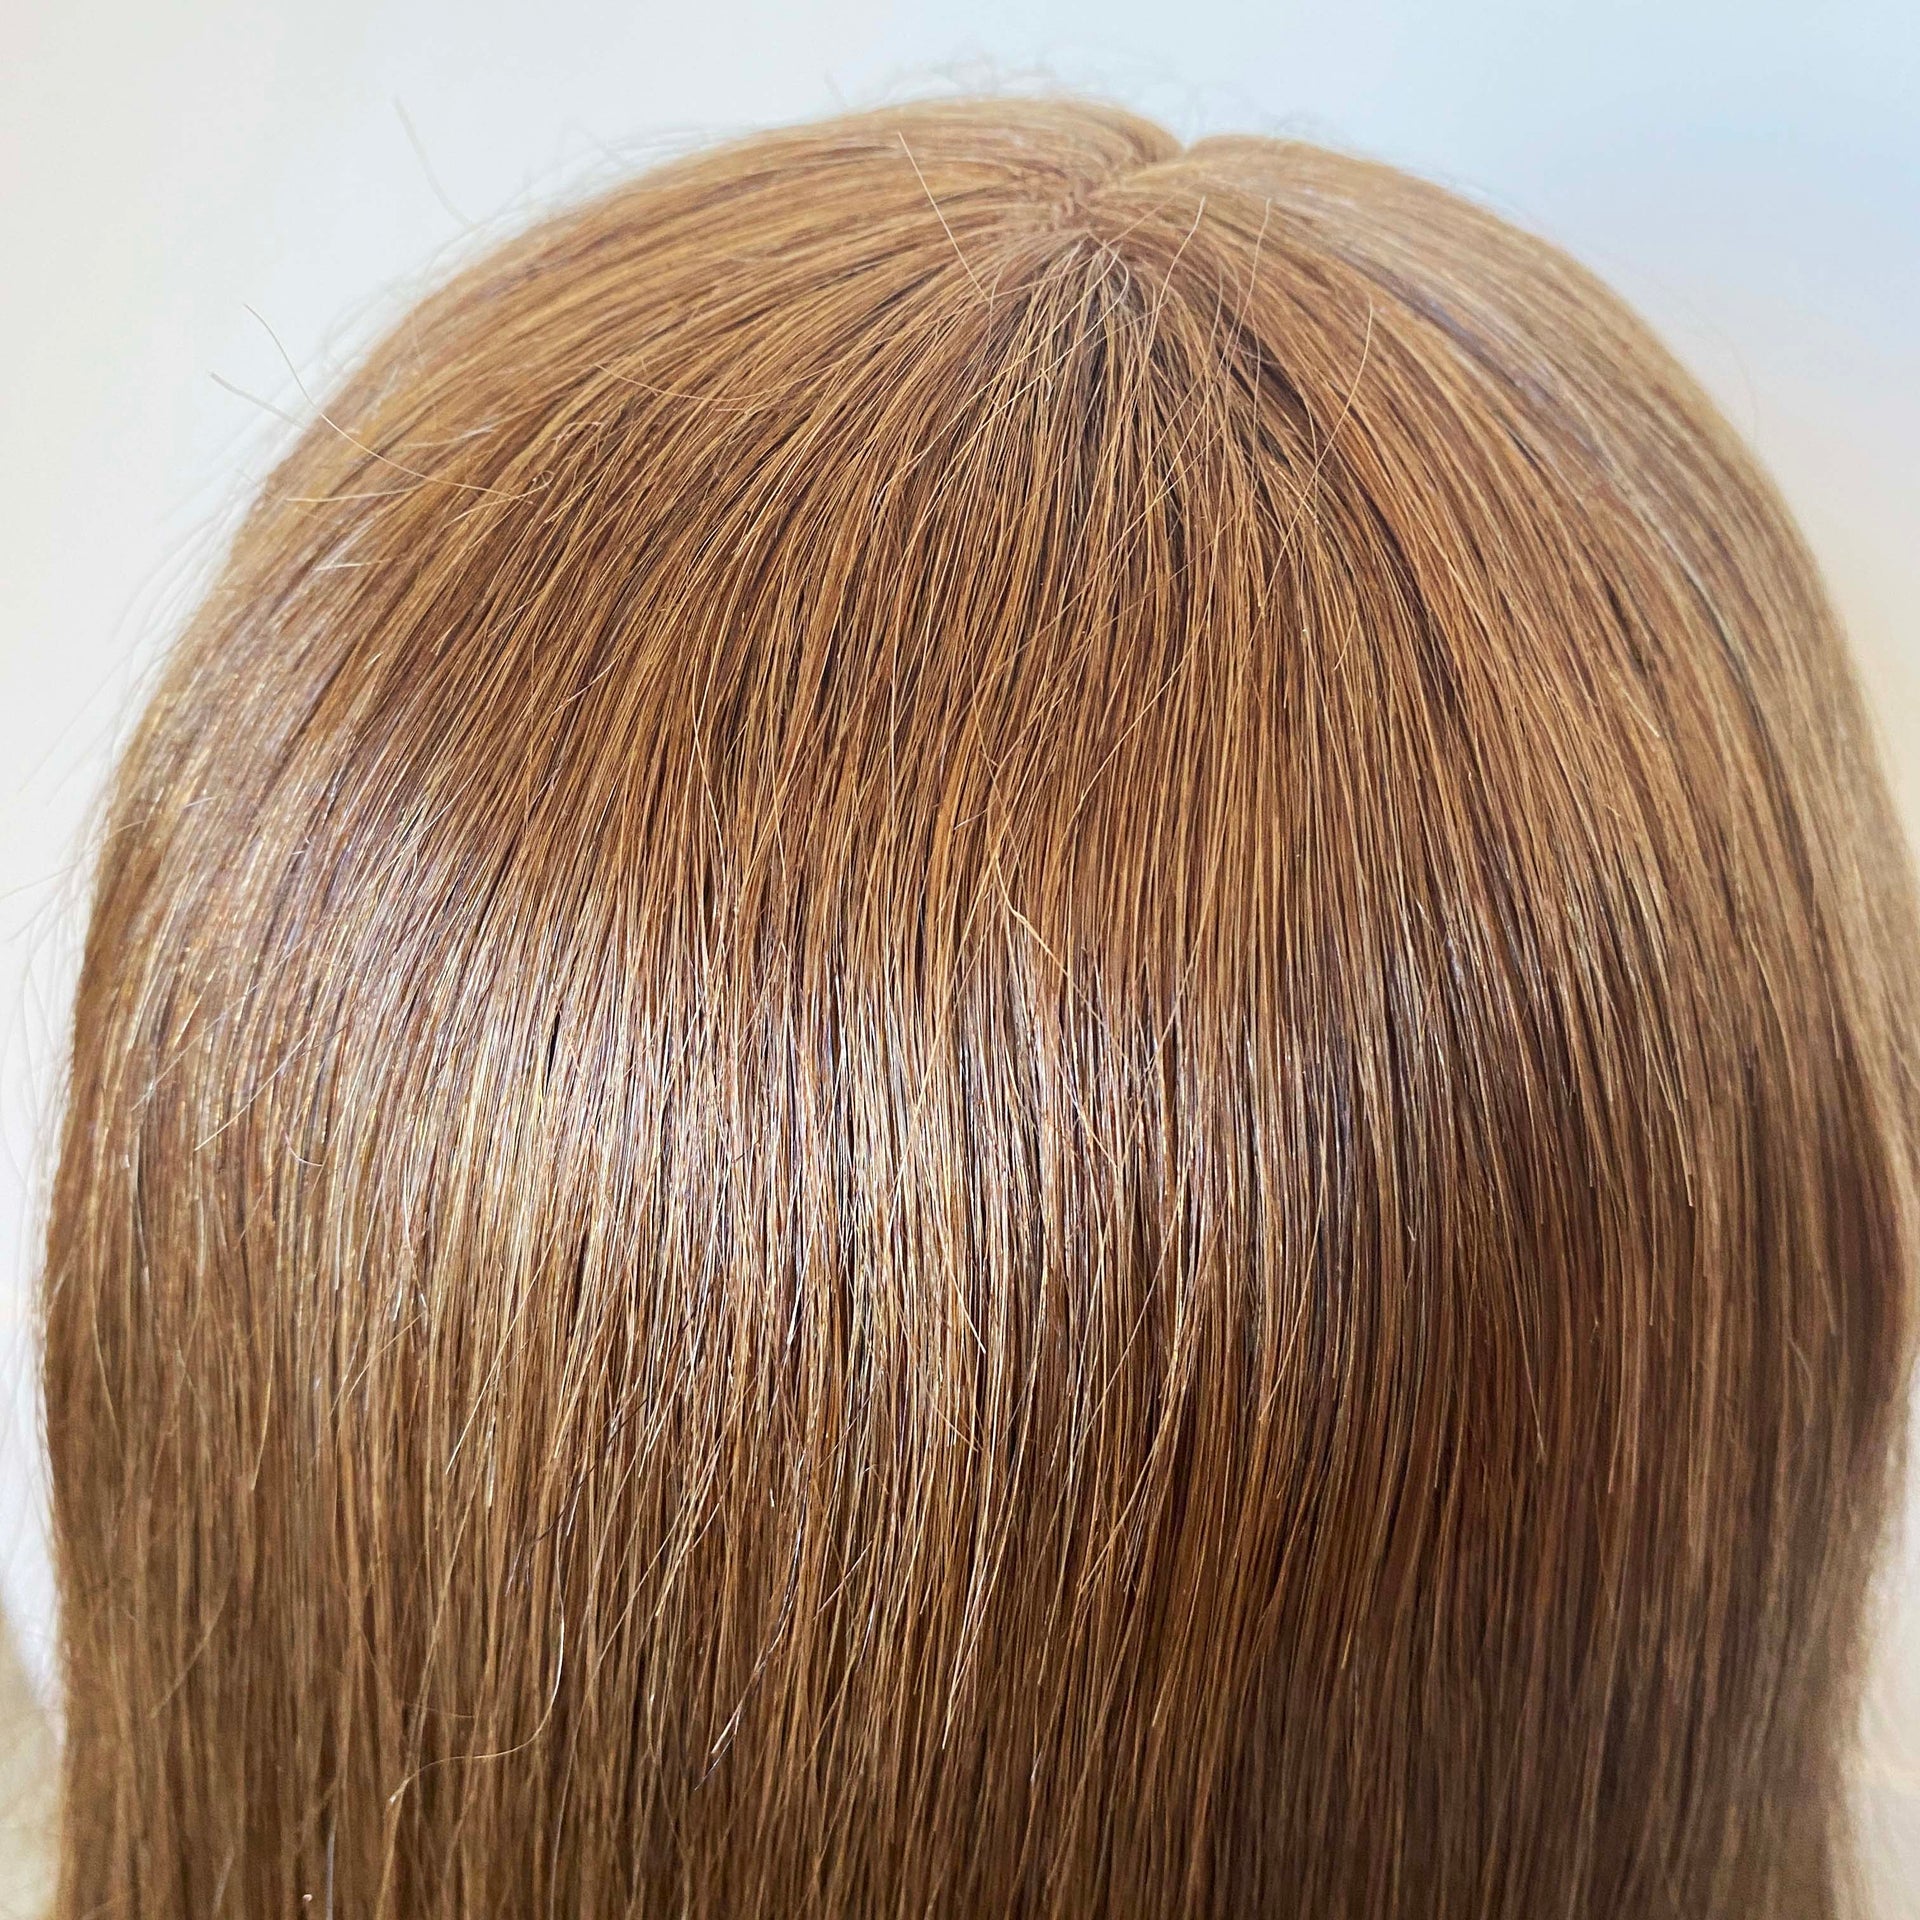 nevermindyrhead Women Caramel Brown Real Human Hair Medium Length Straight Bob Fringe Bangs Wig 14 Inches